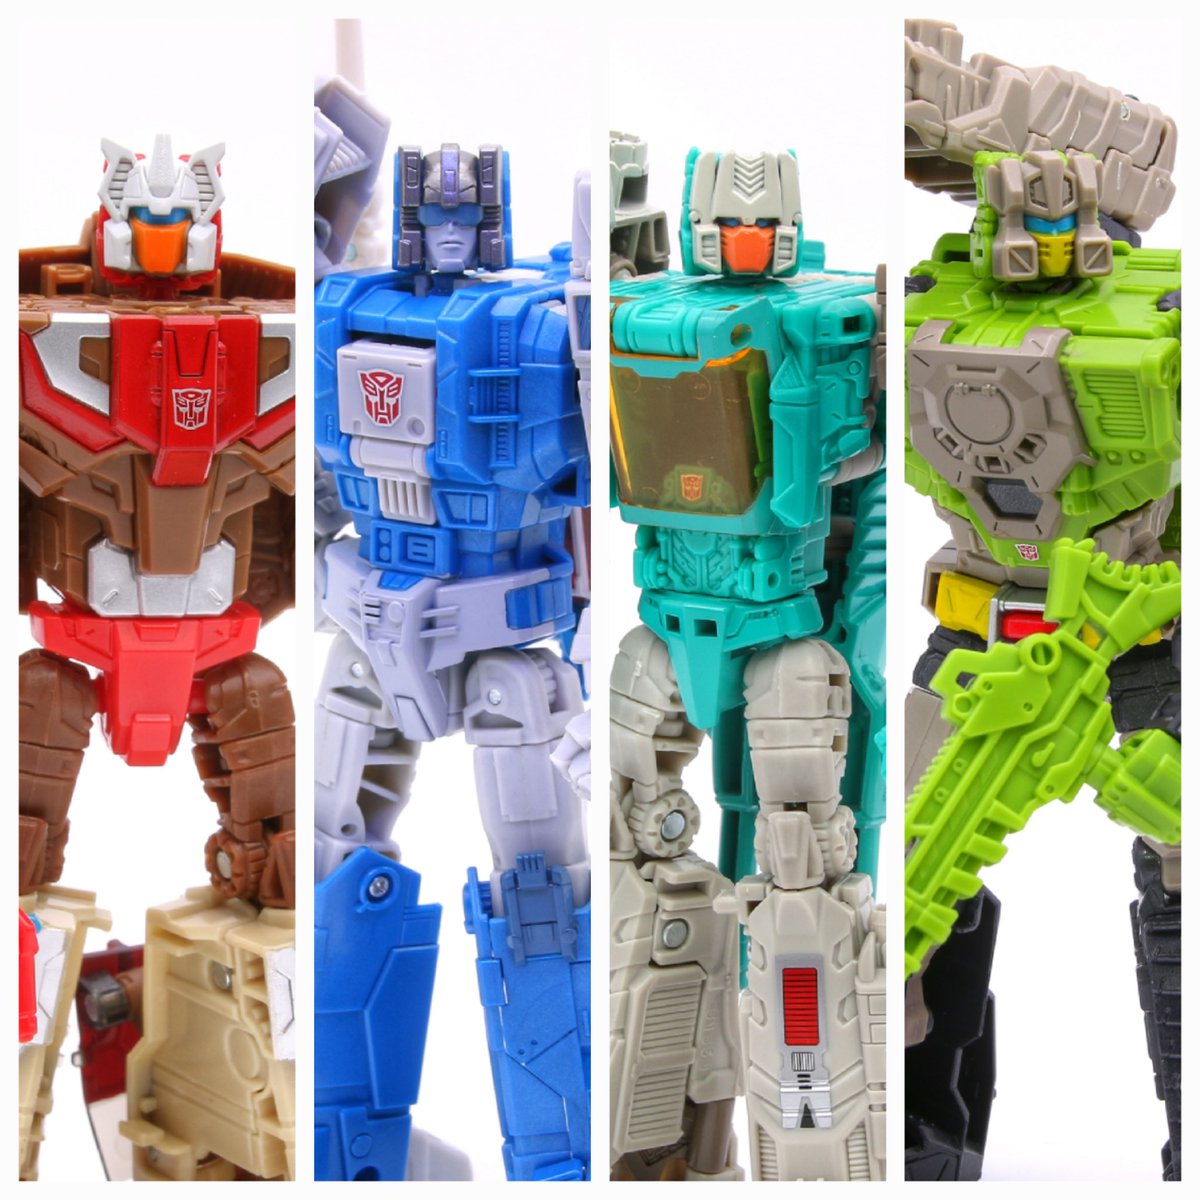 ⚪️ Titans Return Autobot Headmasters!

#transformers #toyphotography